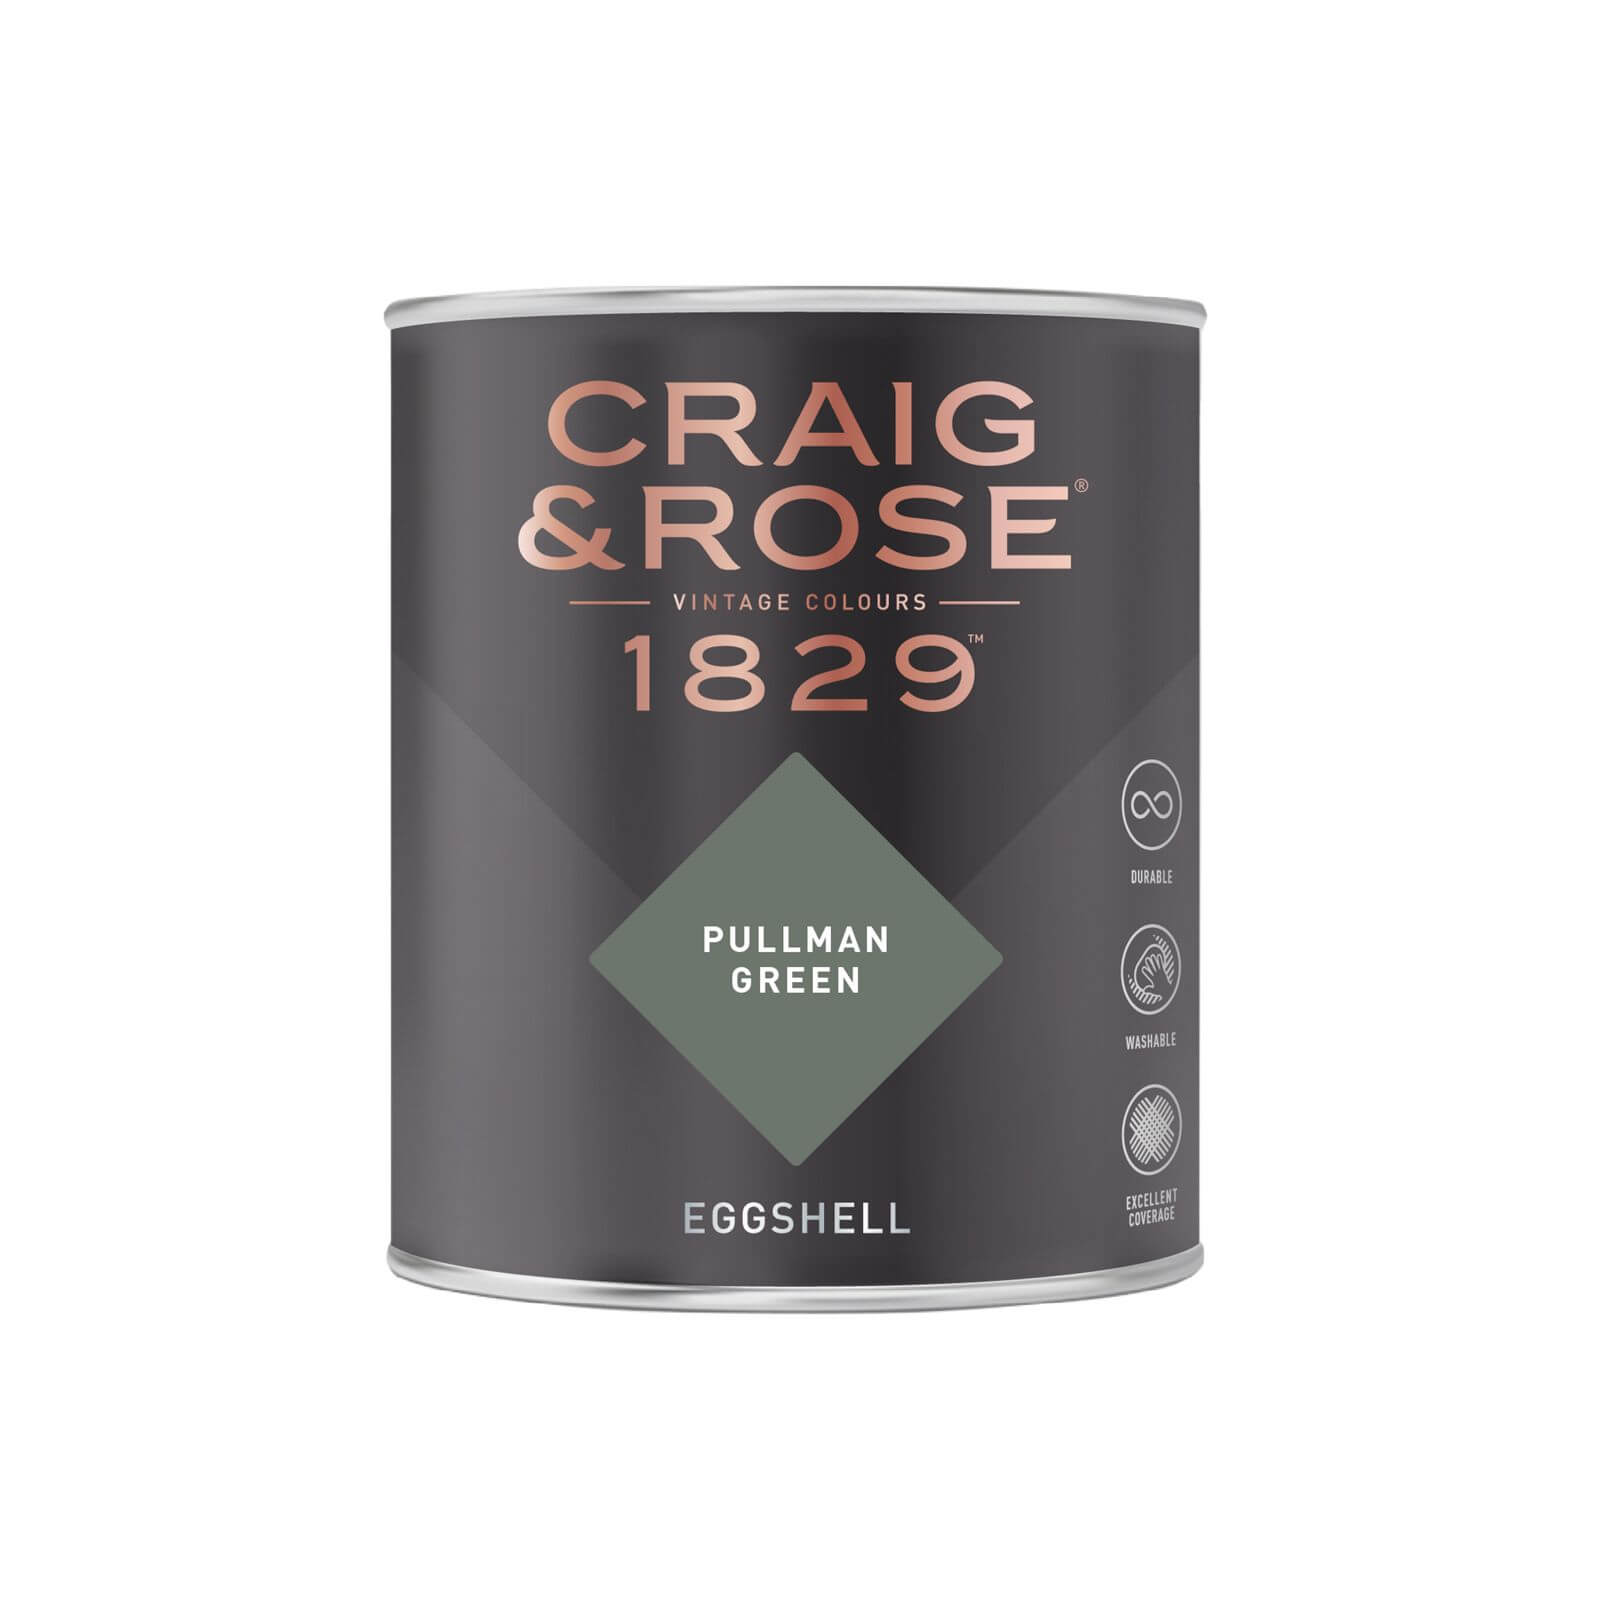 Craig & Rose 1829 Eggshell Paint Pullman Green - 750ml